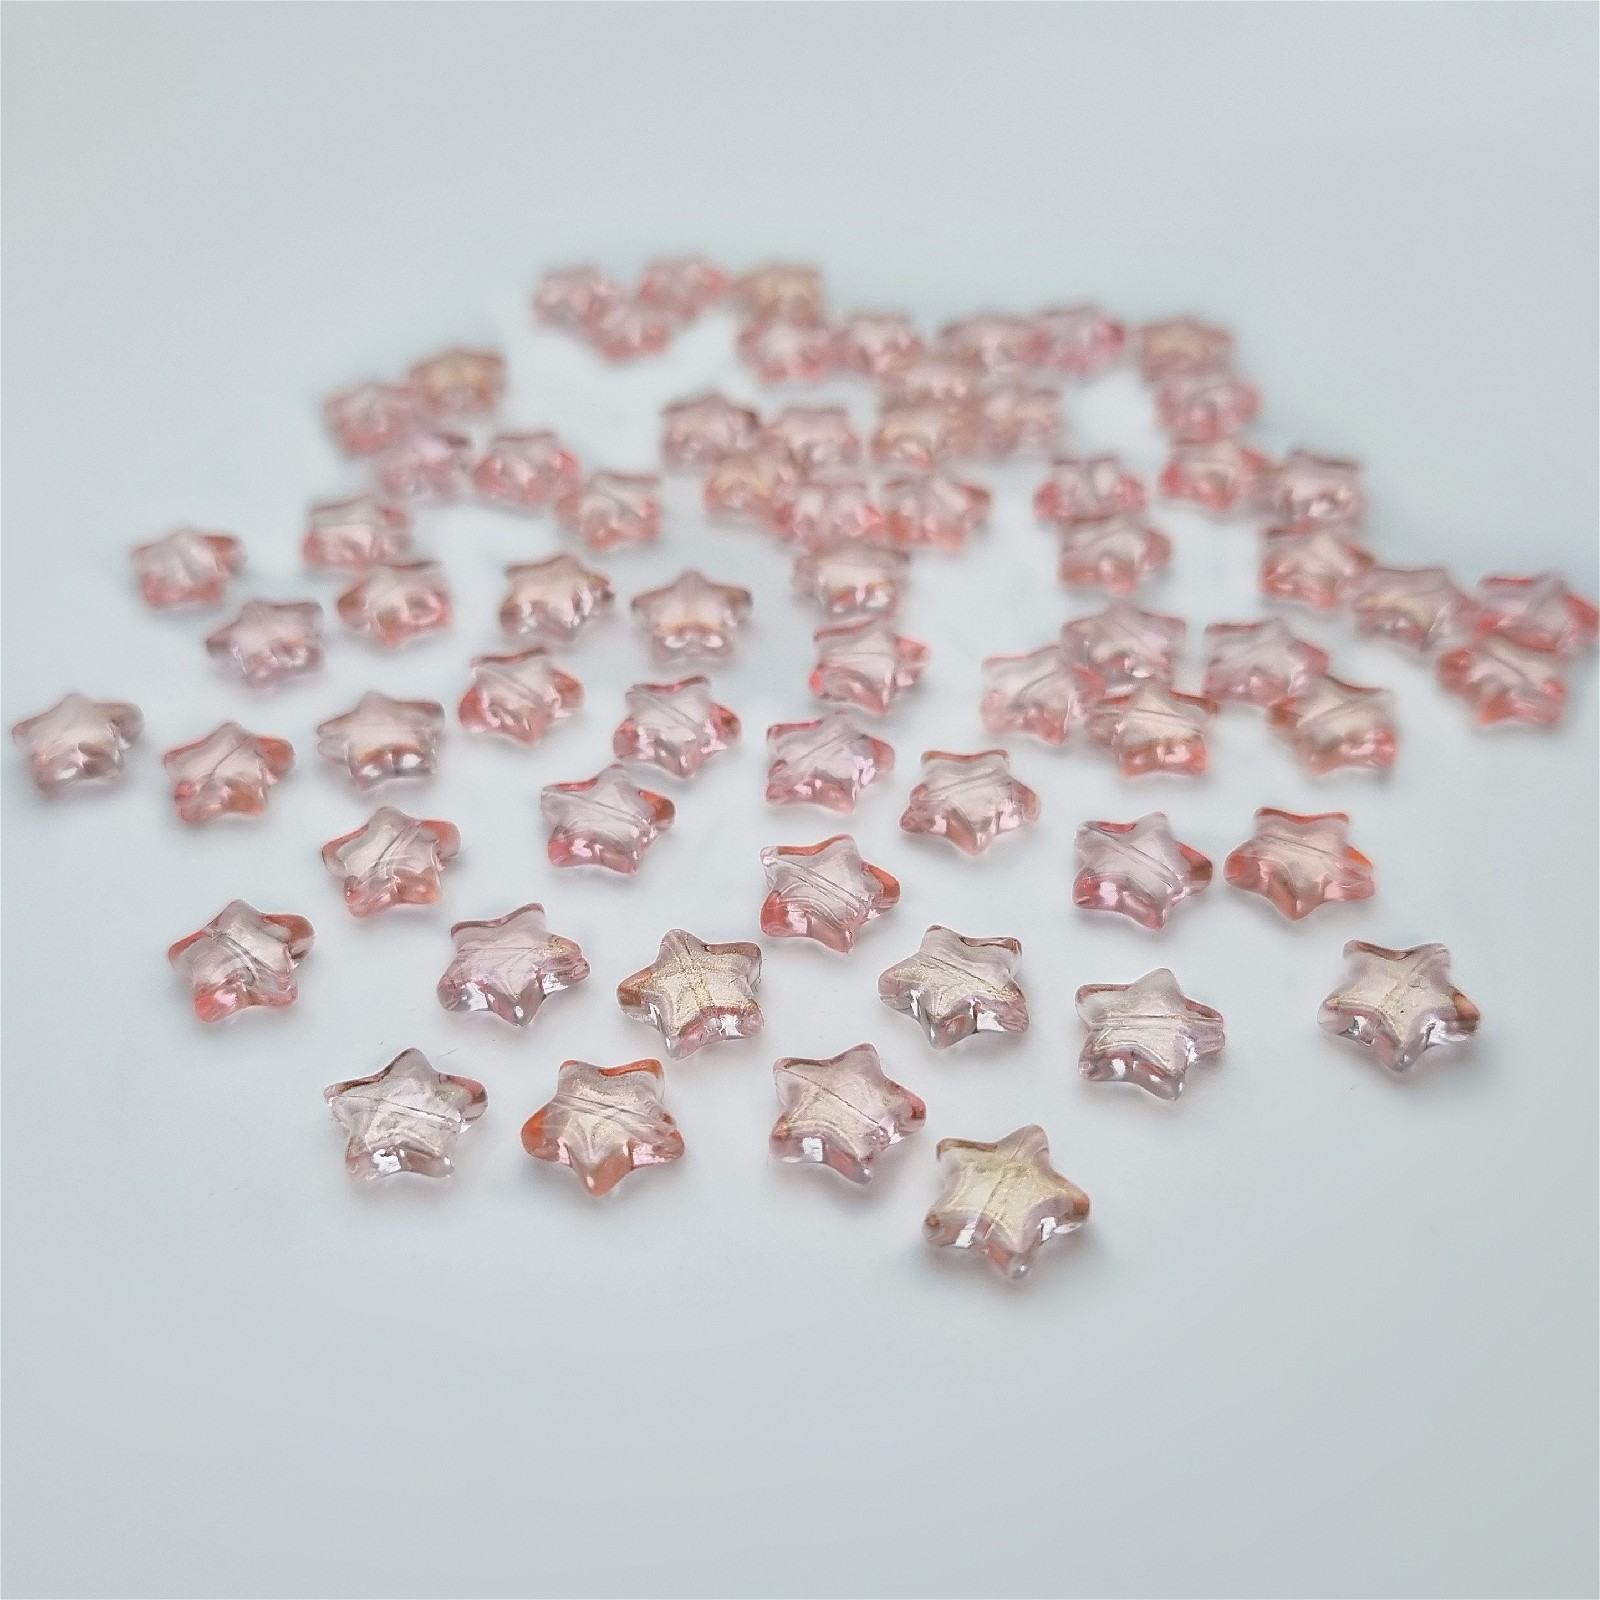 Lampwork jewelry beads / gold dust / pink stars 10mm 2pcs SZLAZGW02